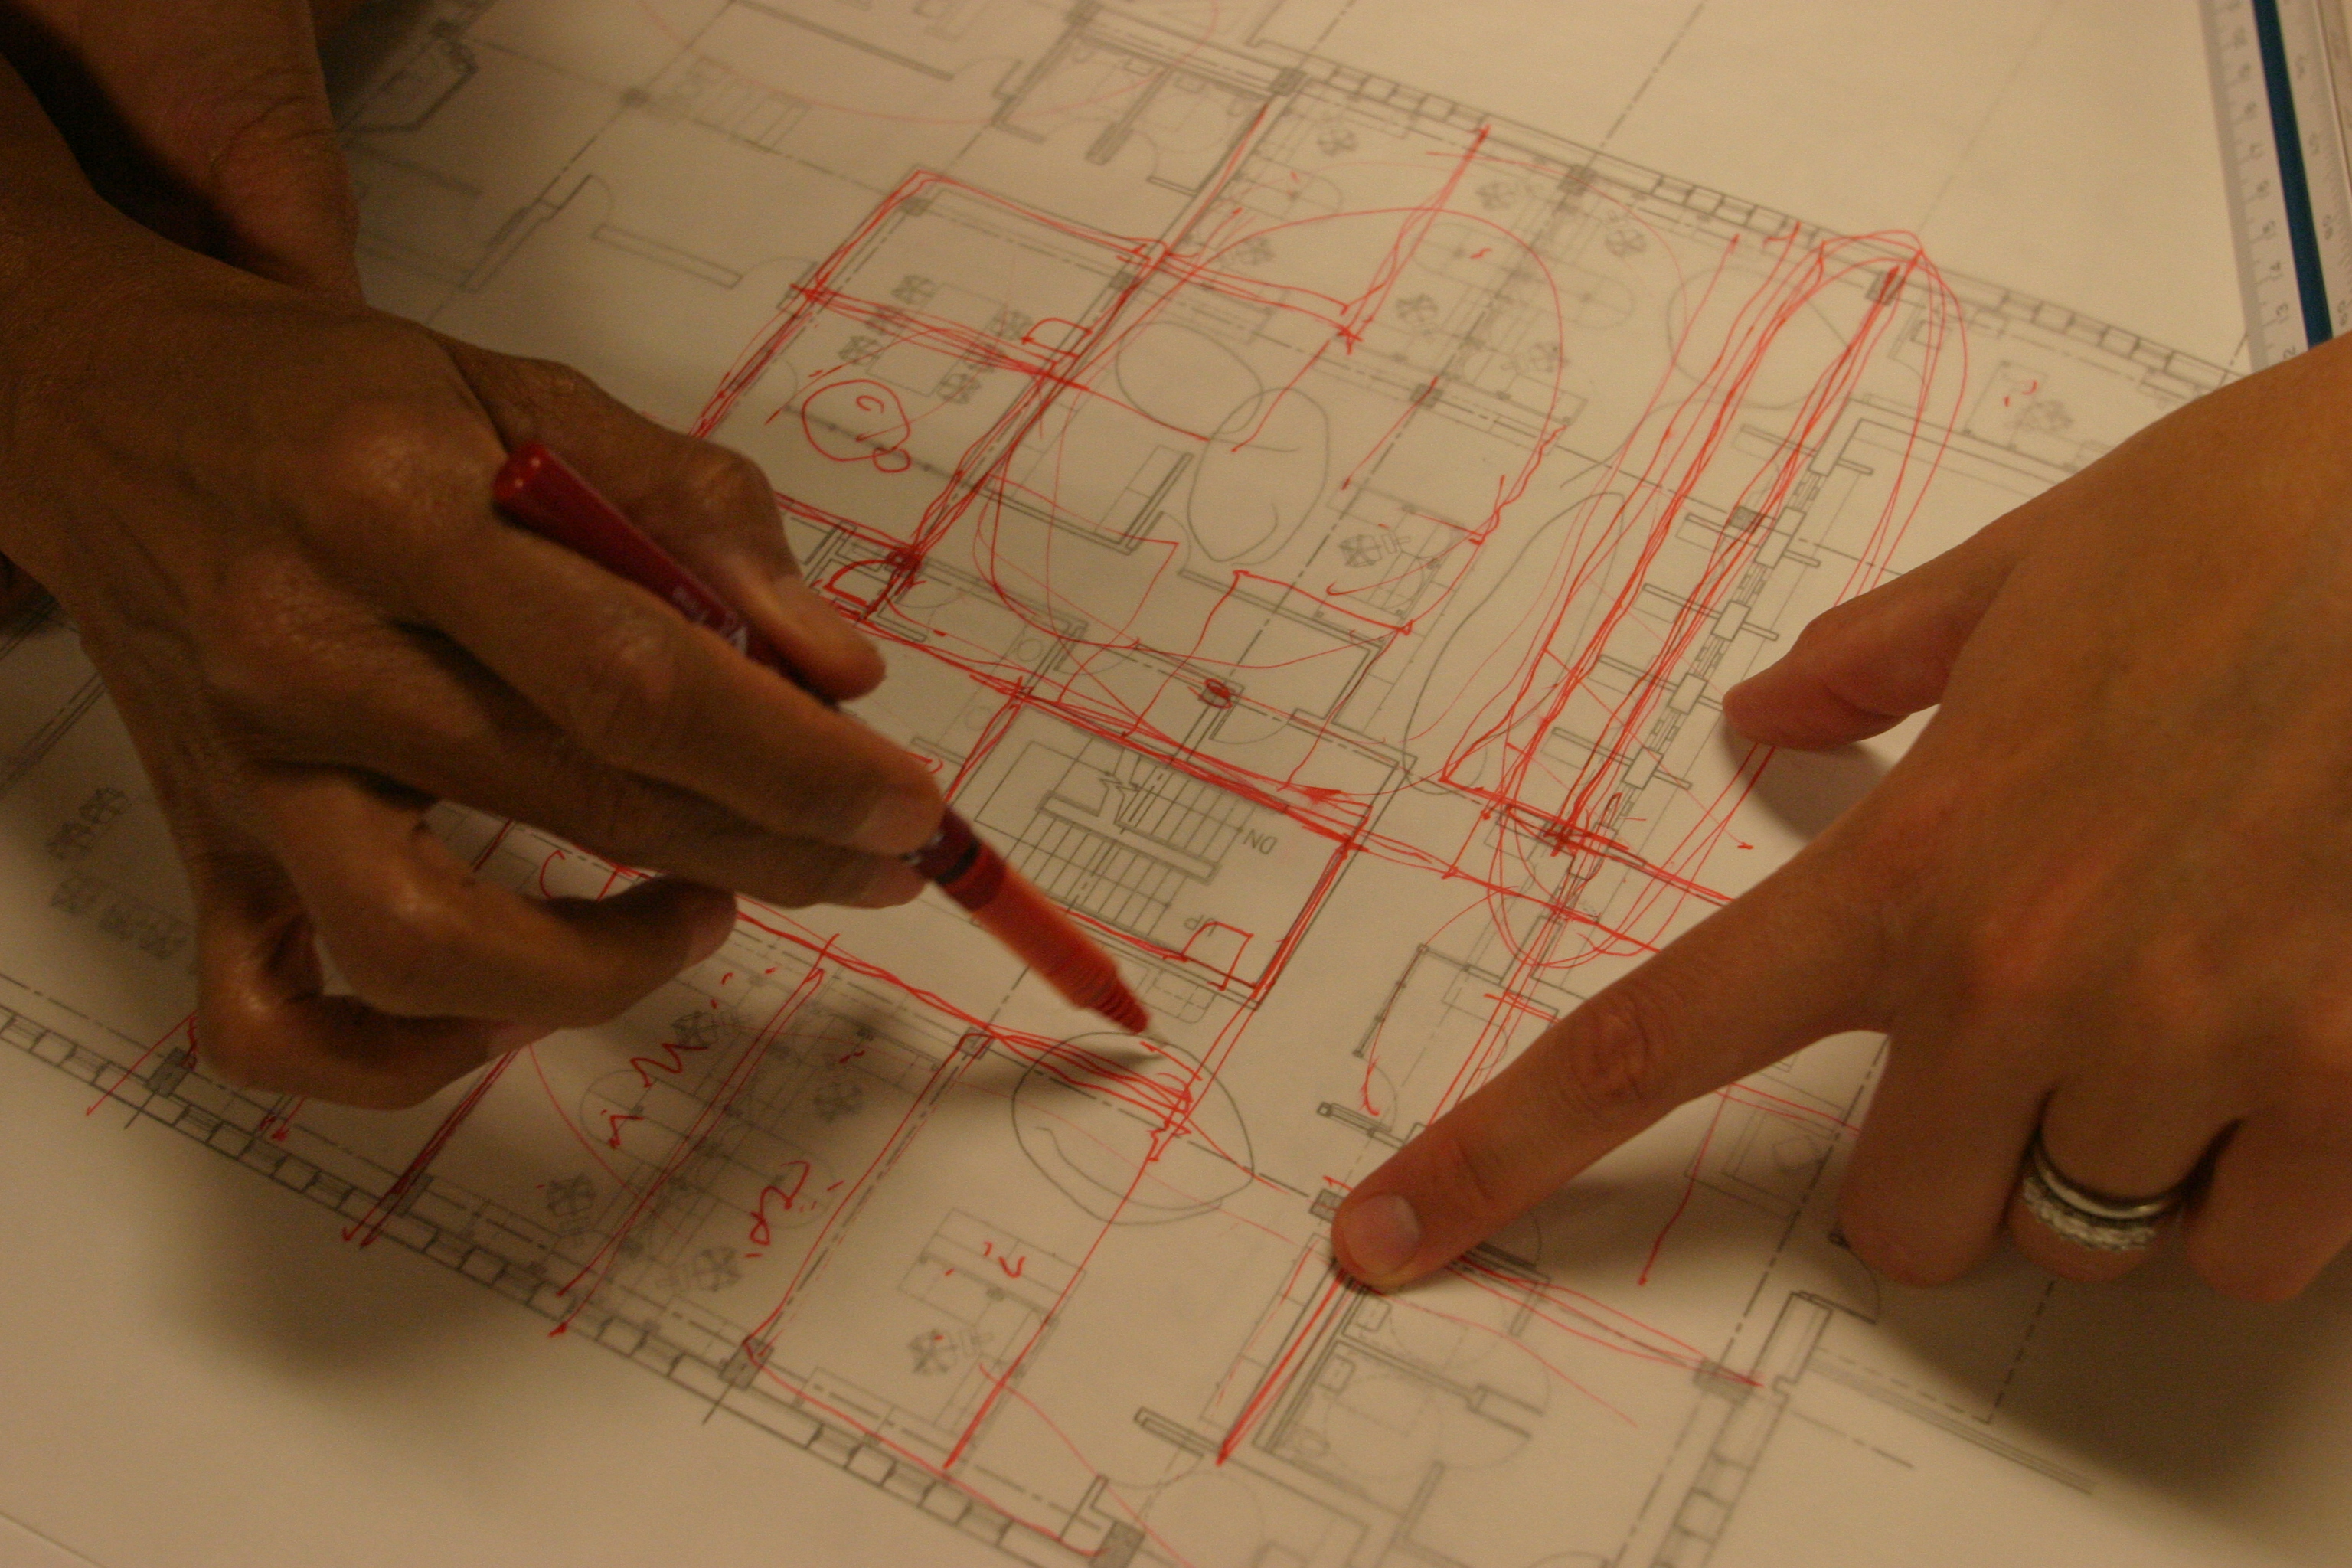 Citizen Architect Scholarship – Architect Planning Commissioners